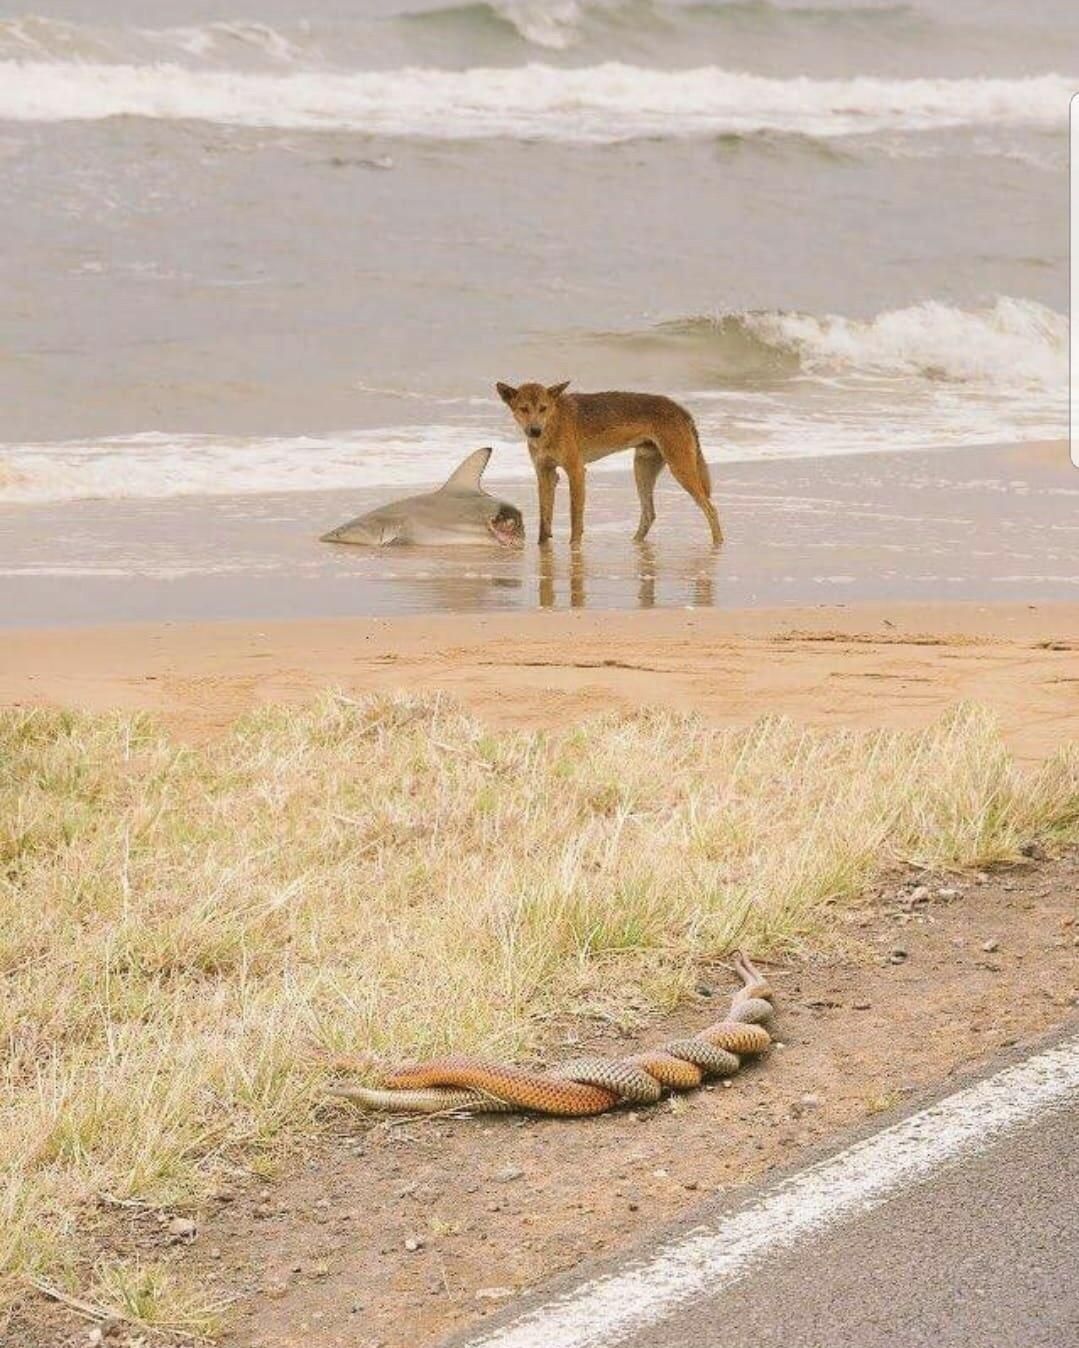 A dingo eating a shark, 2 snakes having sex... welcome to Australia